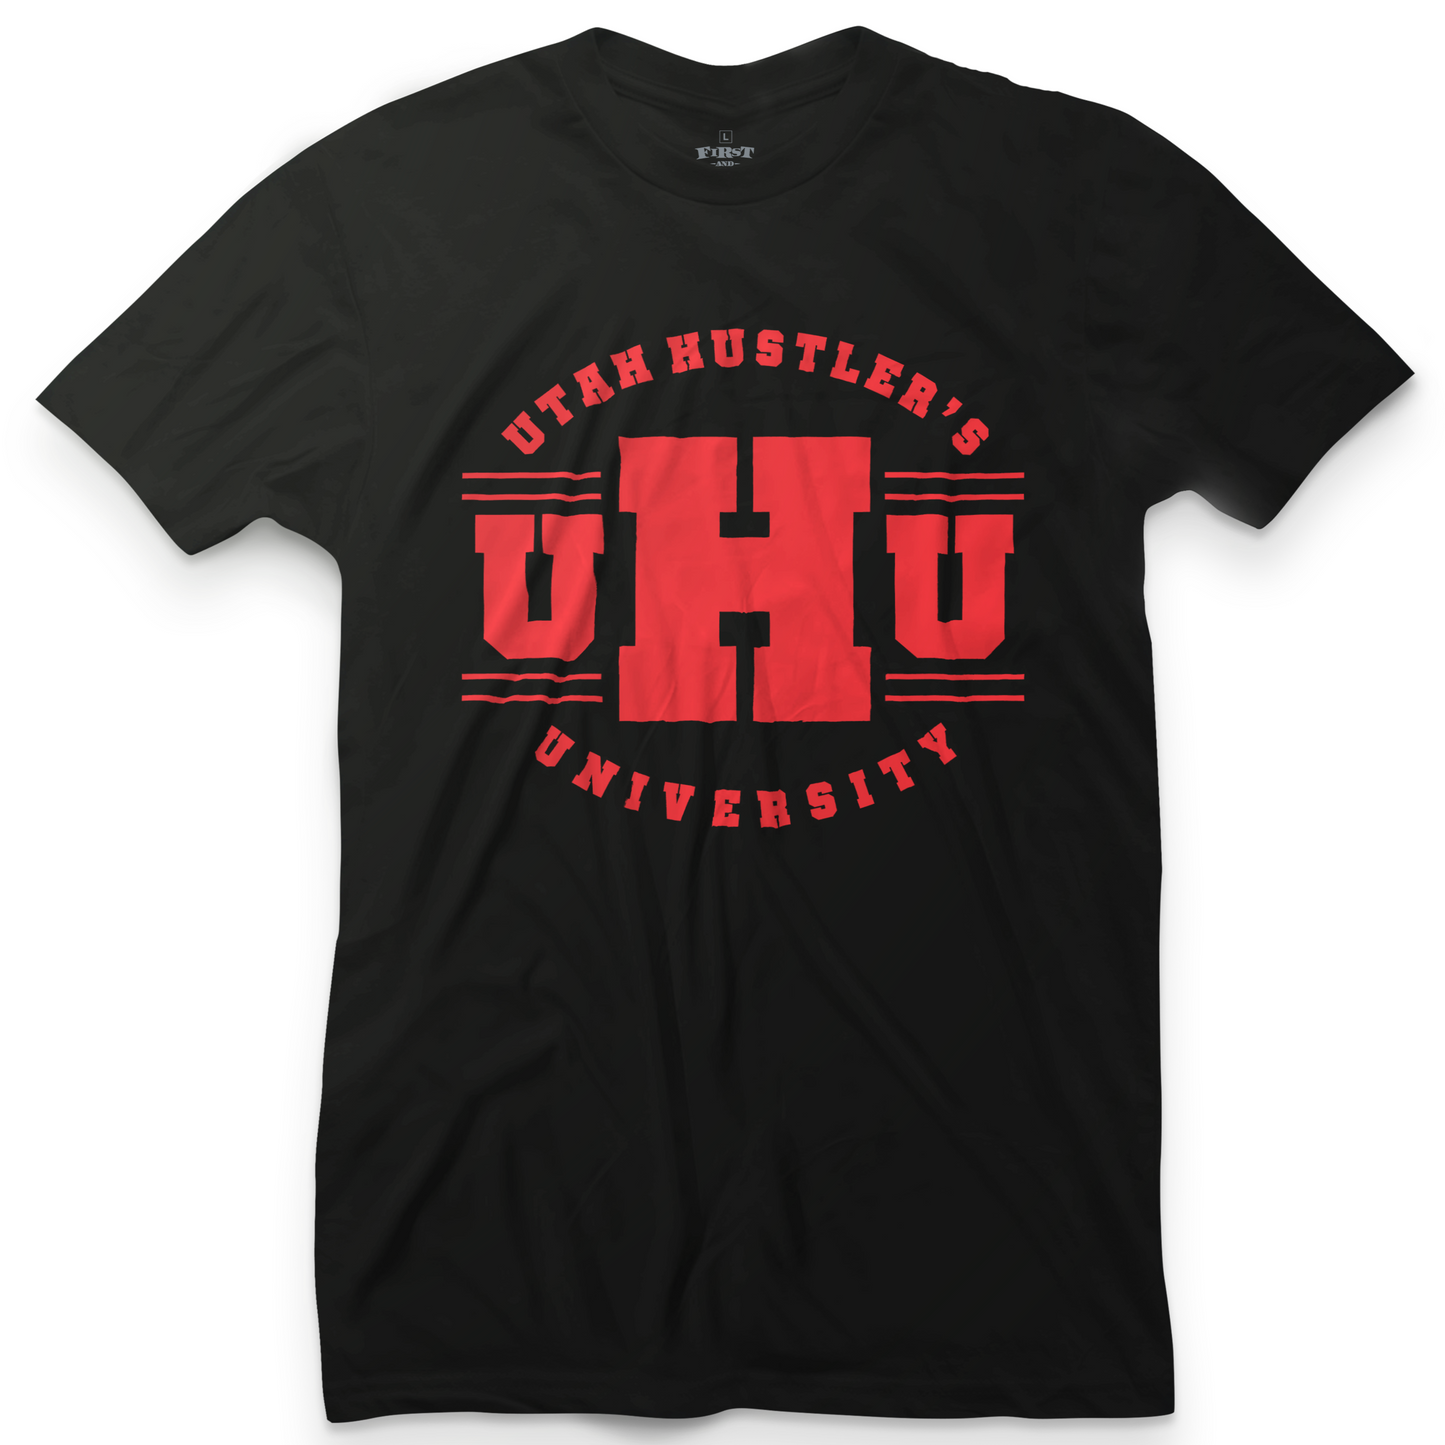 Utah Hustler's University Tee